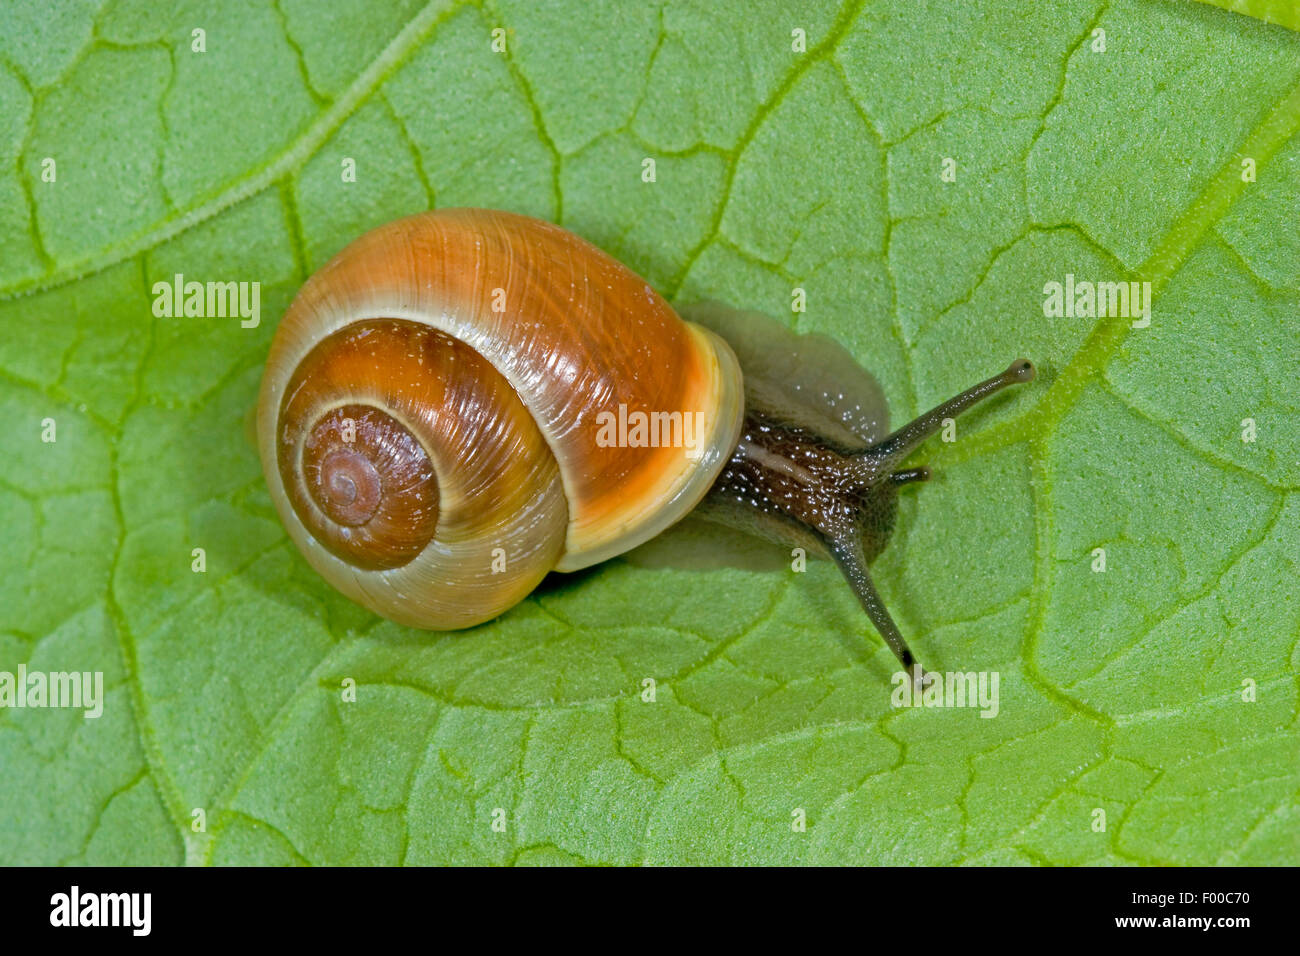 White-lip gardensnail, White-lipped snail, Garden snail, Smaller banded snail (Cepaea hortensis), banded snail on a leaf, Germany Stock Photo